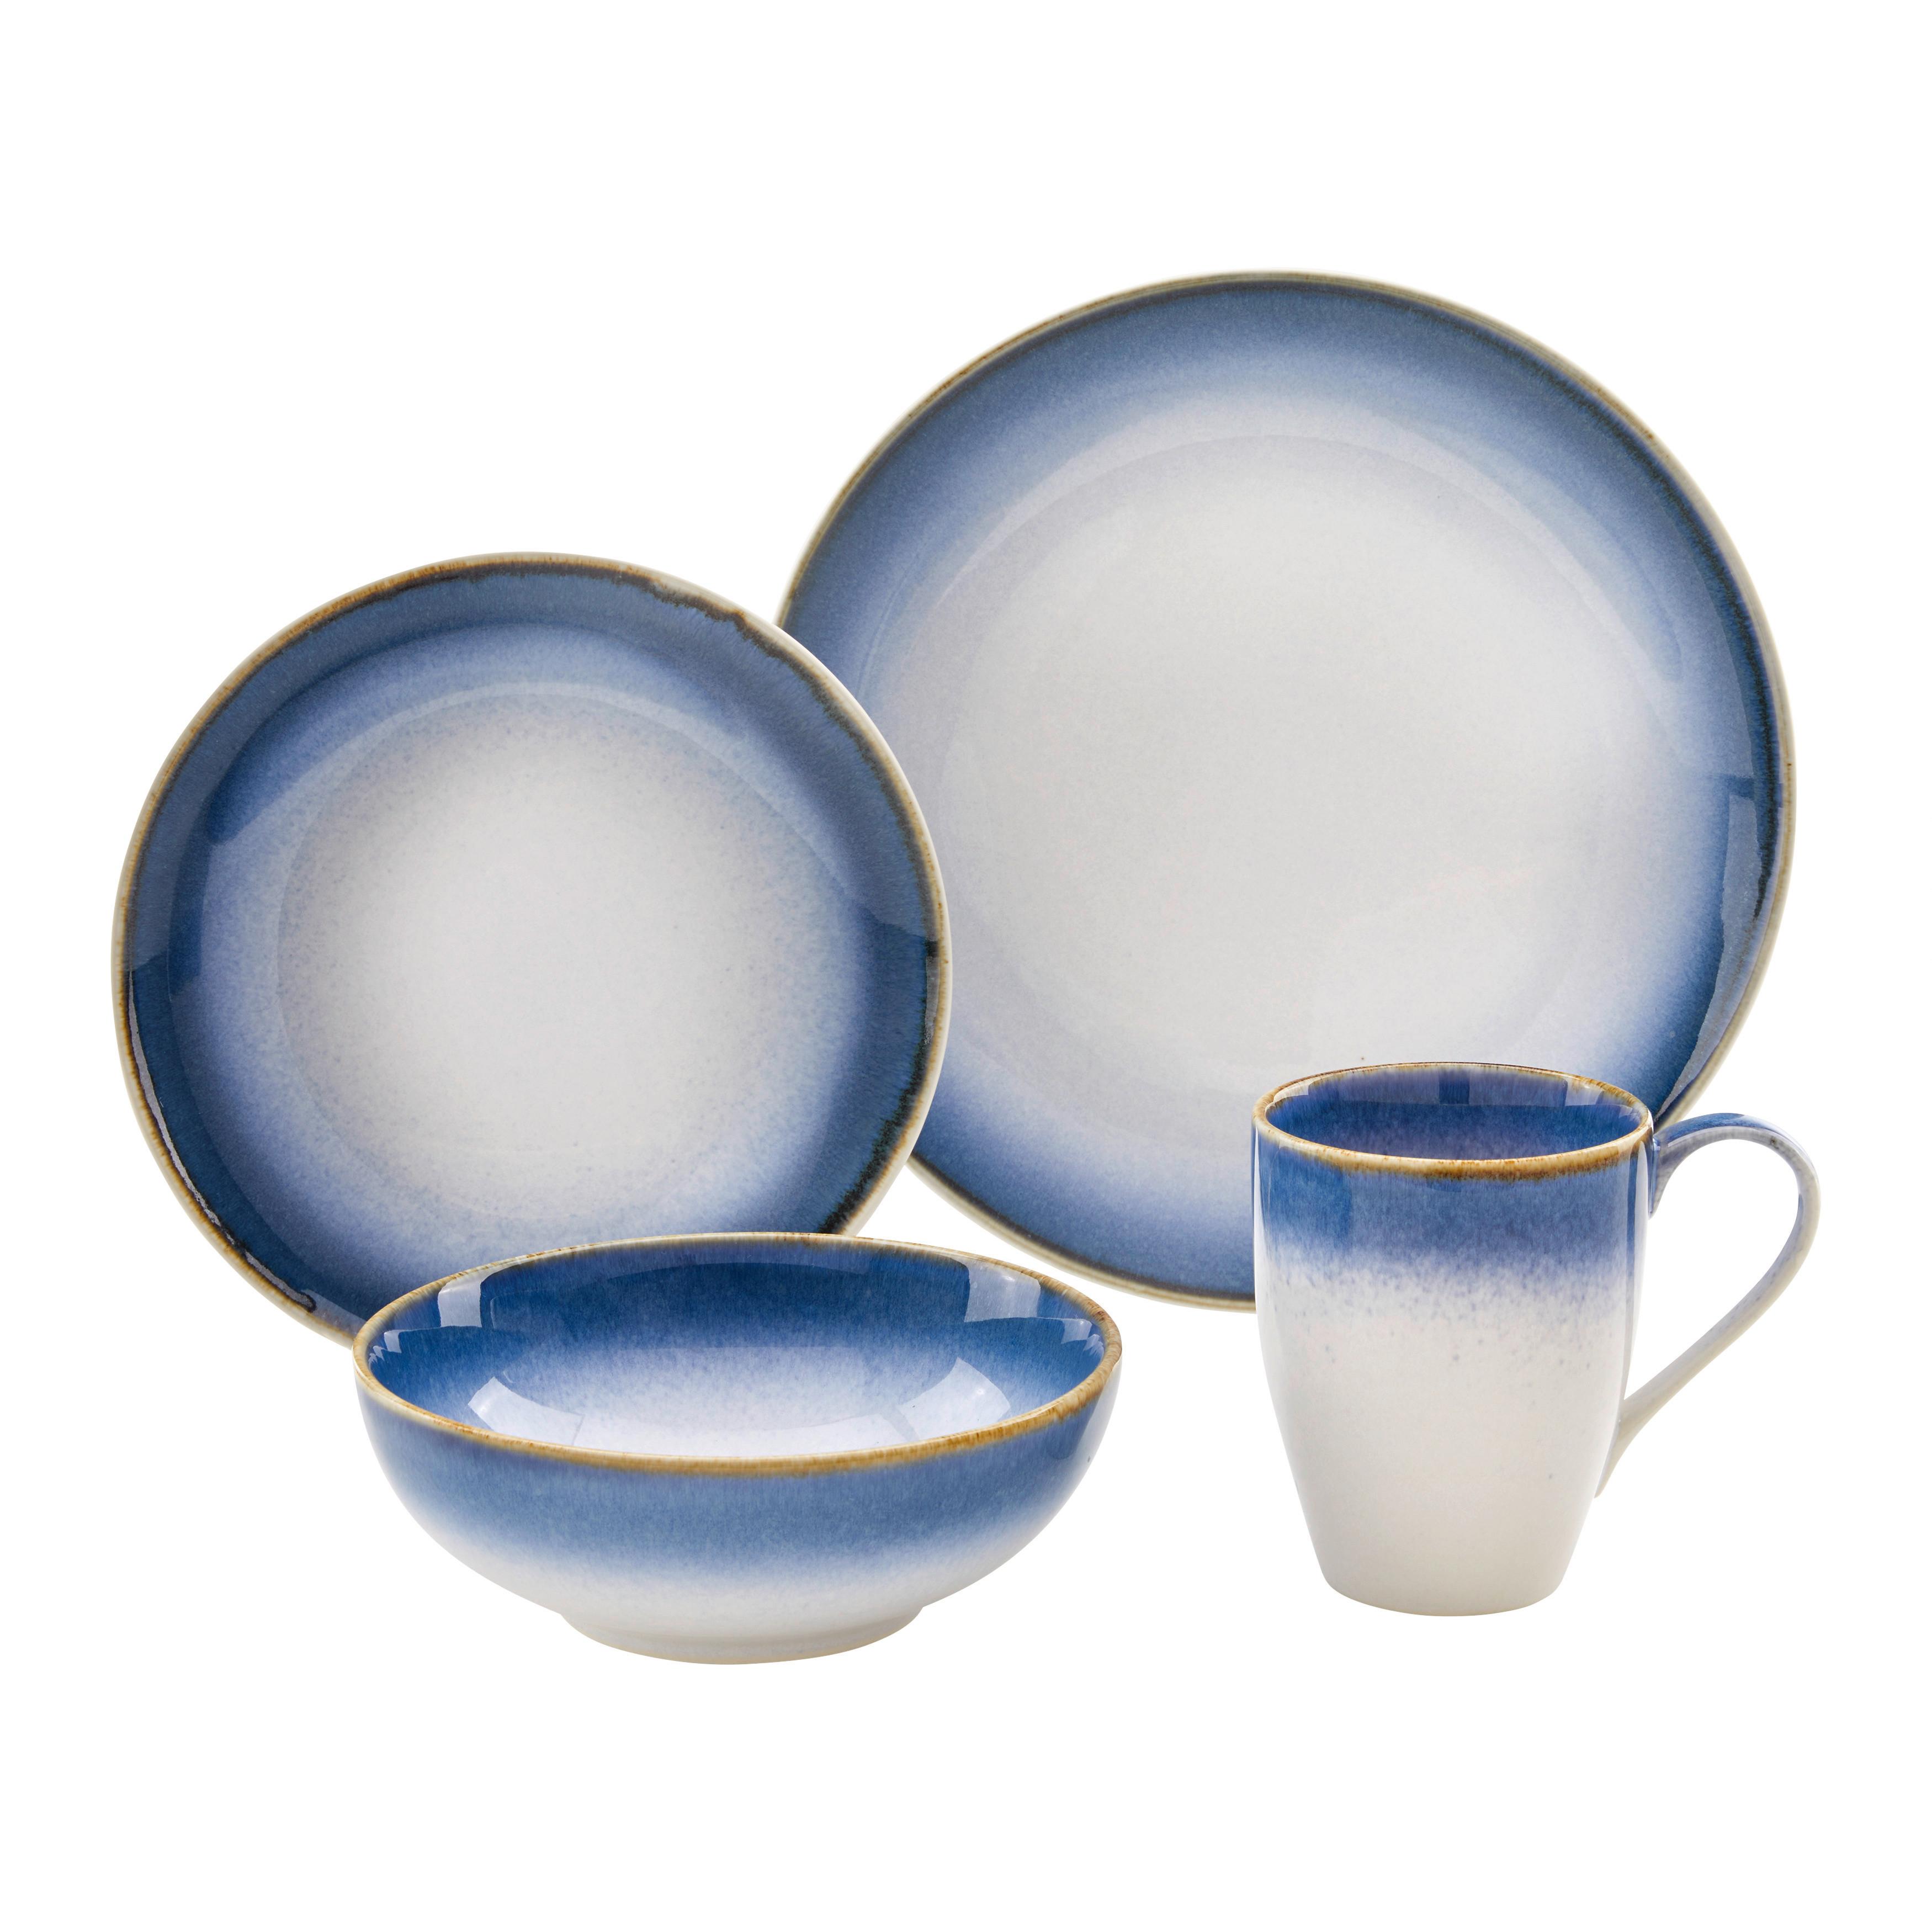 Kombiservice Cascade, 8-teilig - Blau/Weiß, MODERN, Keramik (31/31/28,5cm) - Creatable